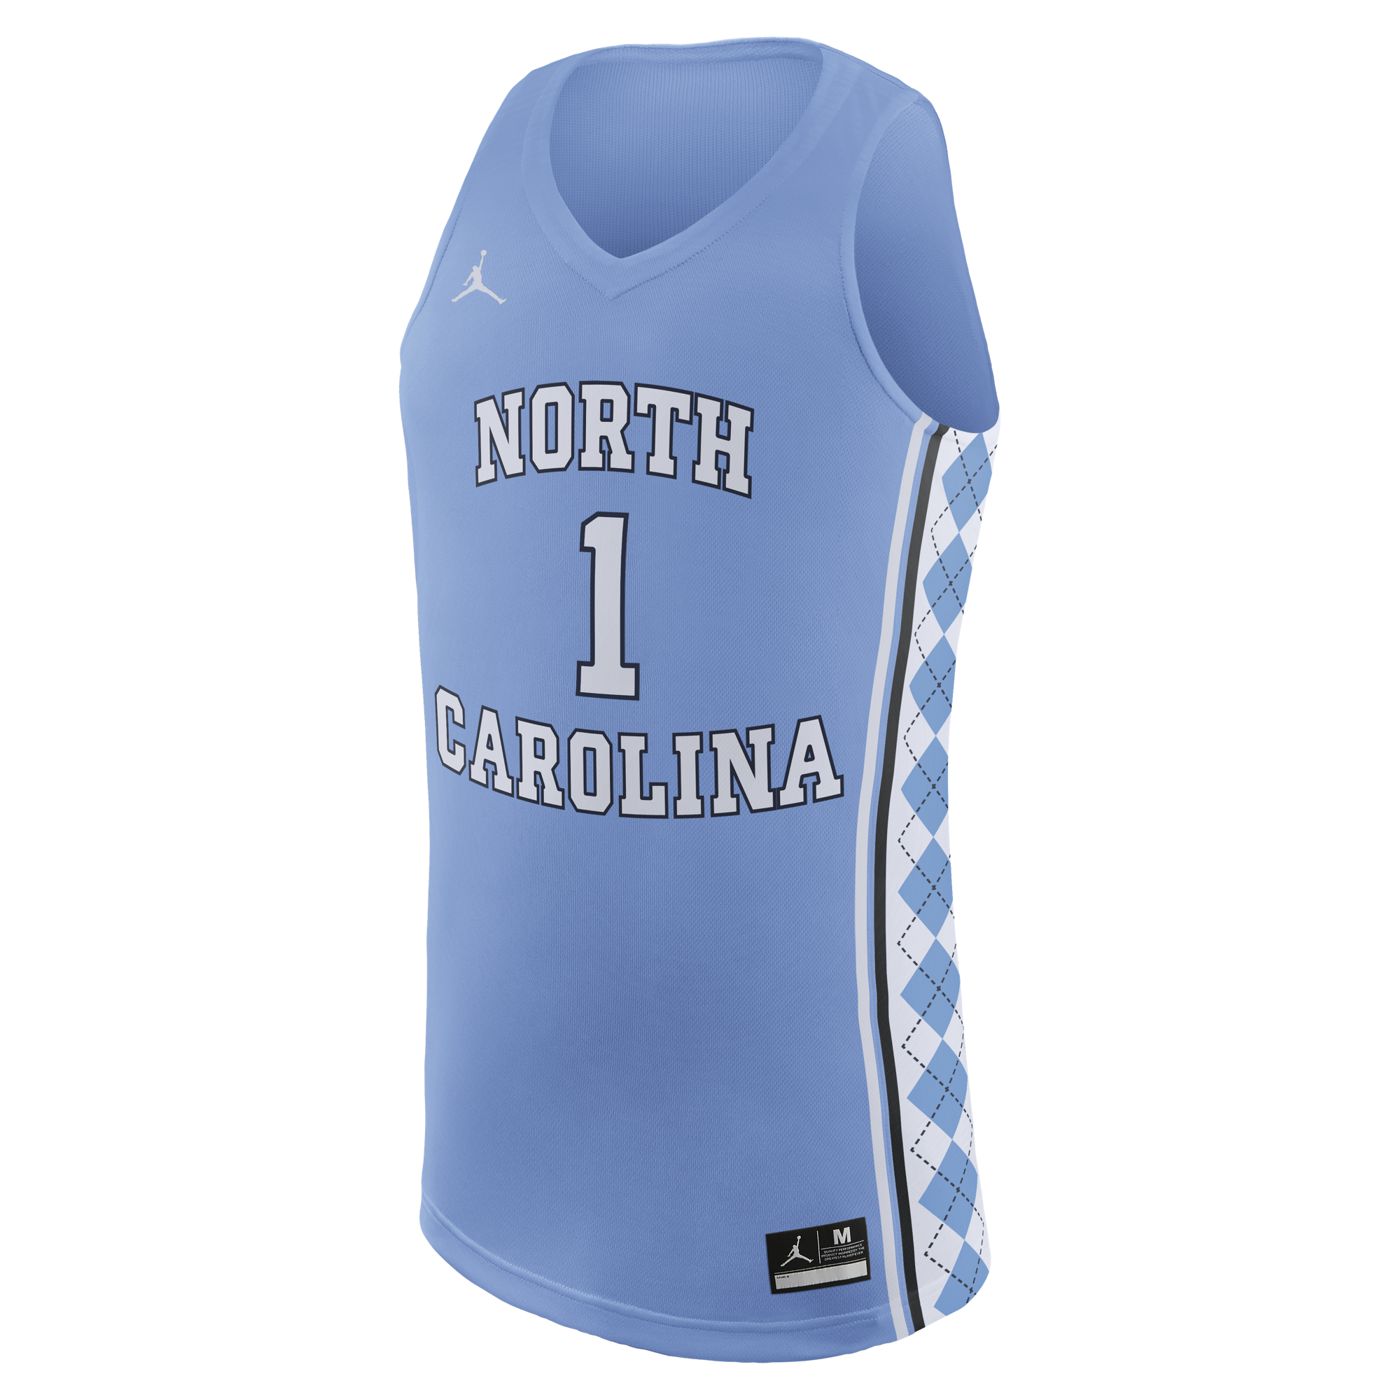 north carolina tar heels basketball jersey